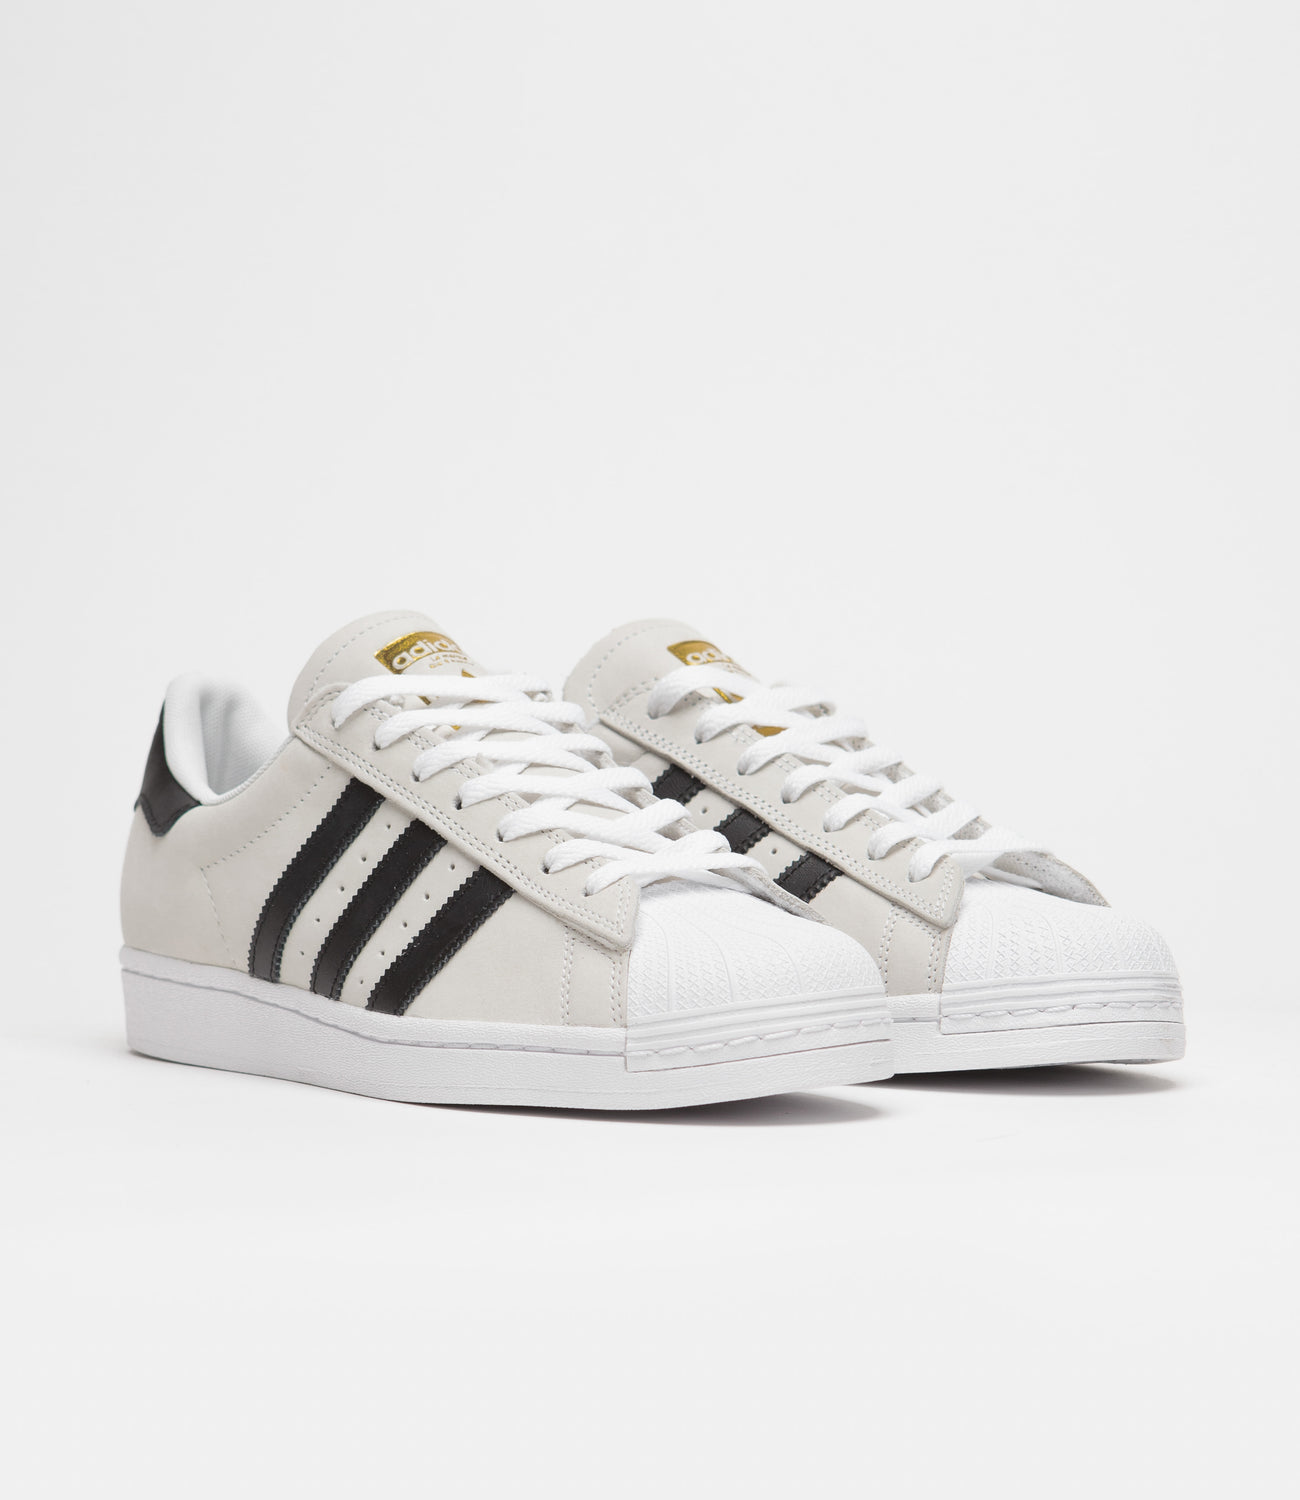 Shop Adidas Superstar Collection for BRANDS Online | Foot Locker KSA